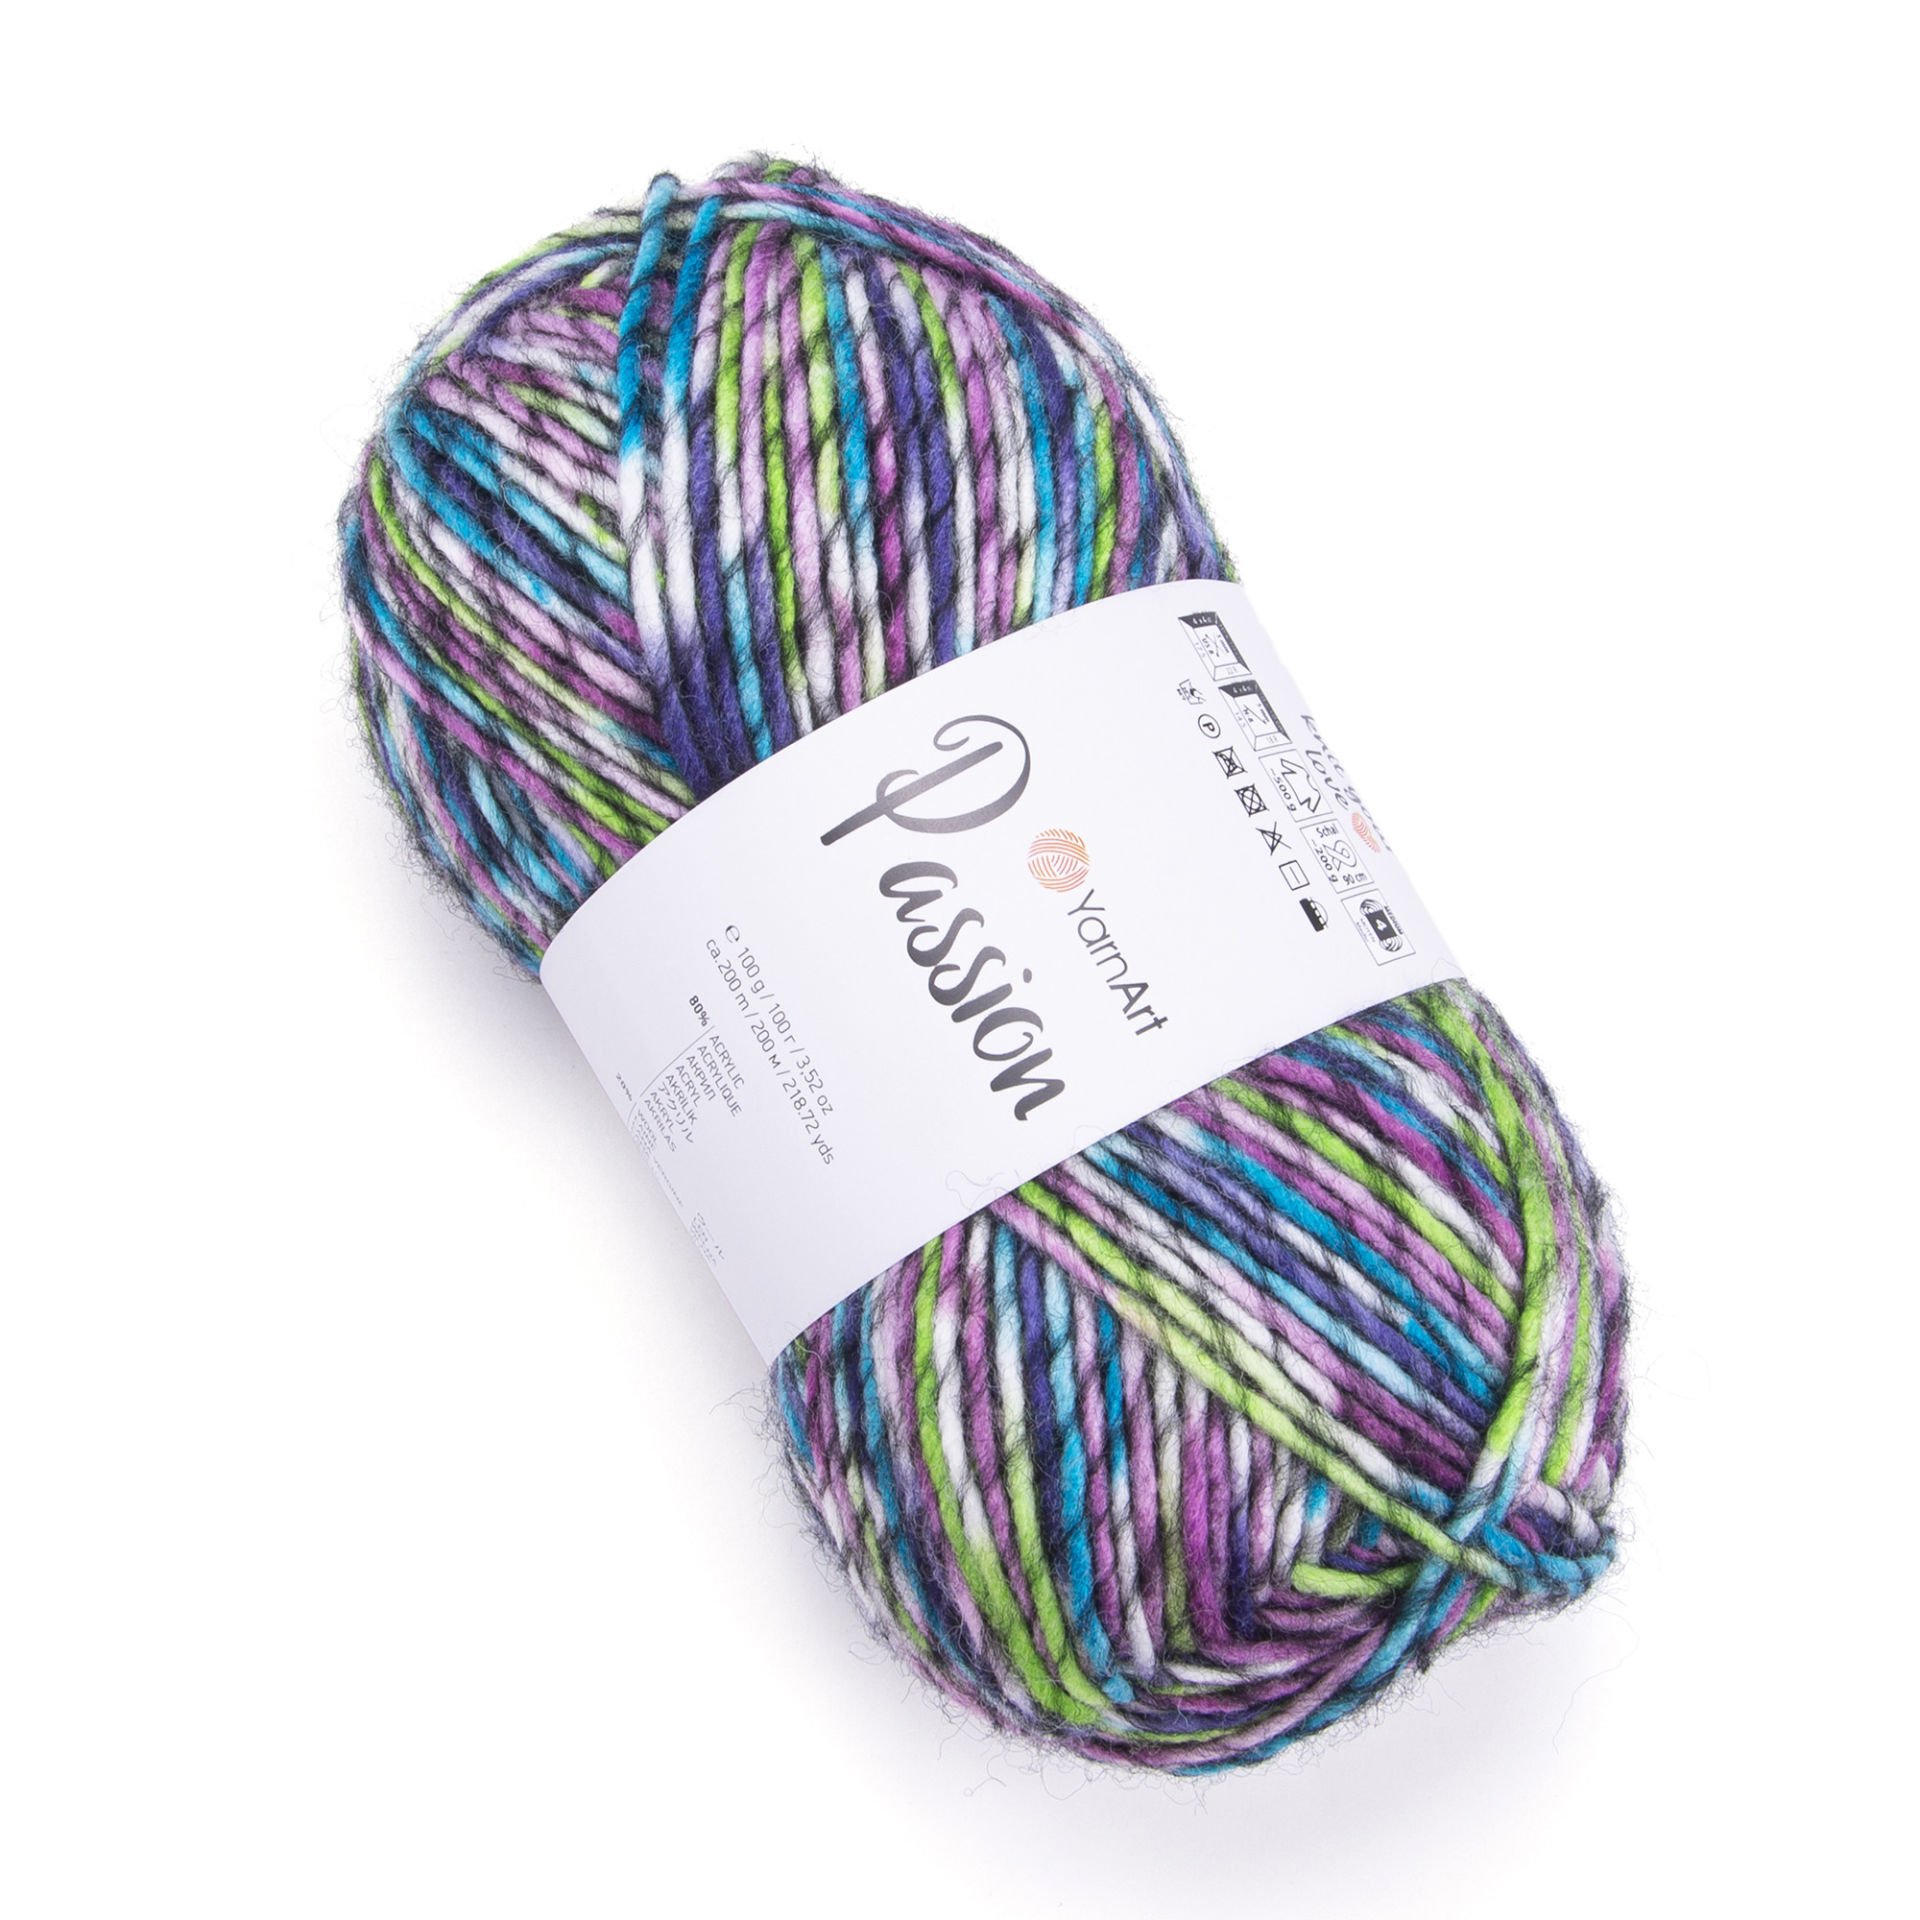 Yarnart Passion - Multicolor Knitting Yarn Variegated - 1250